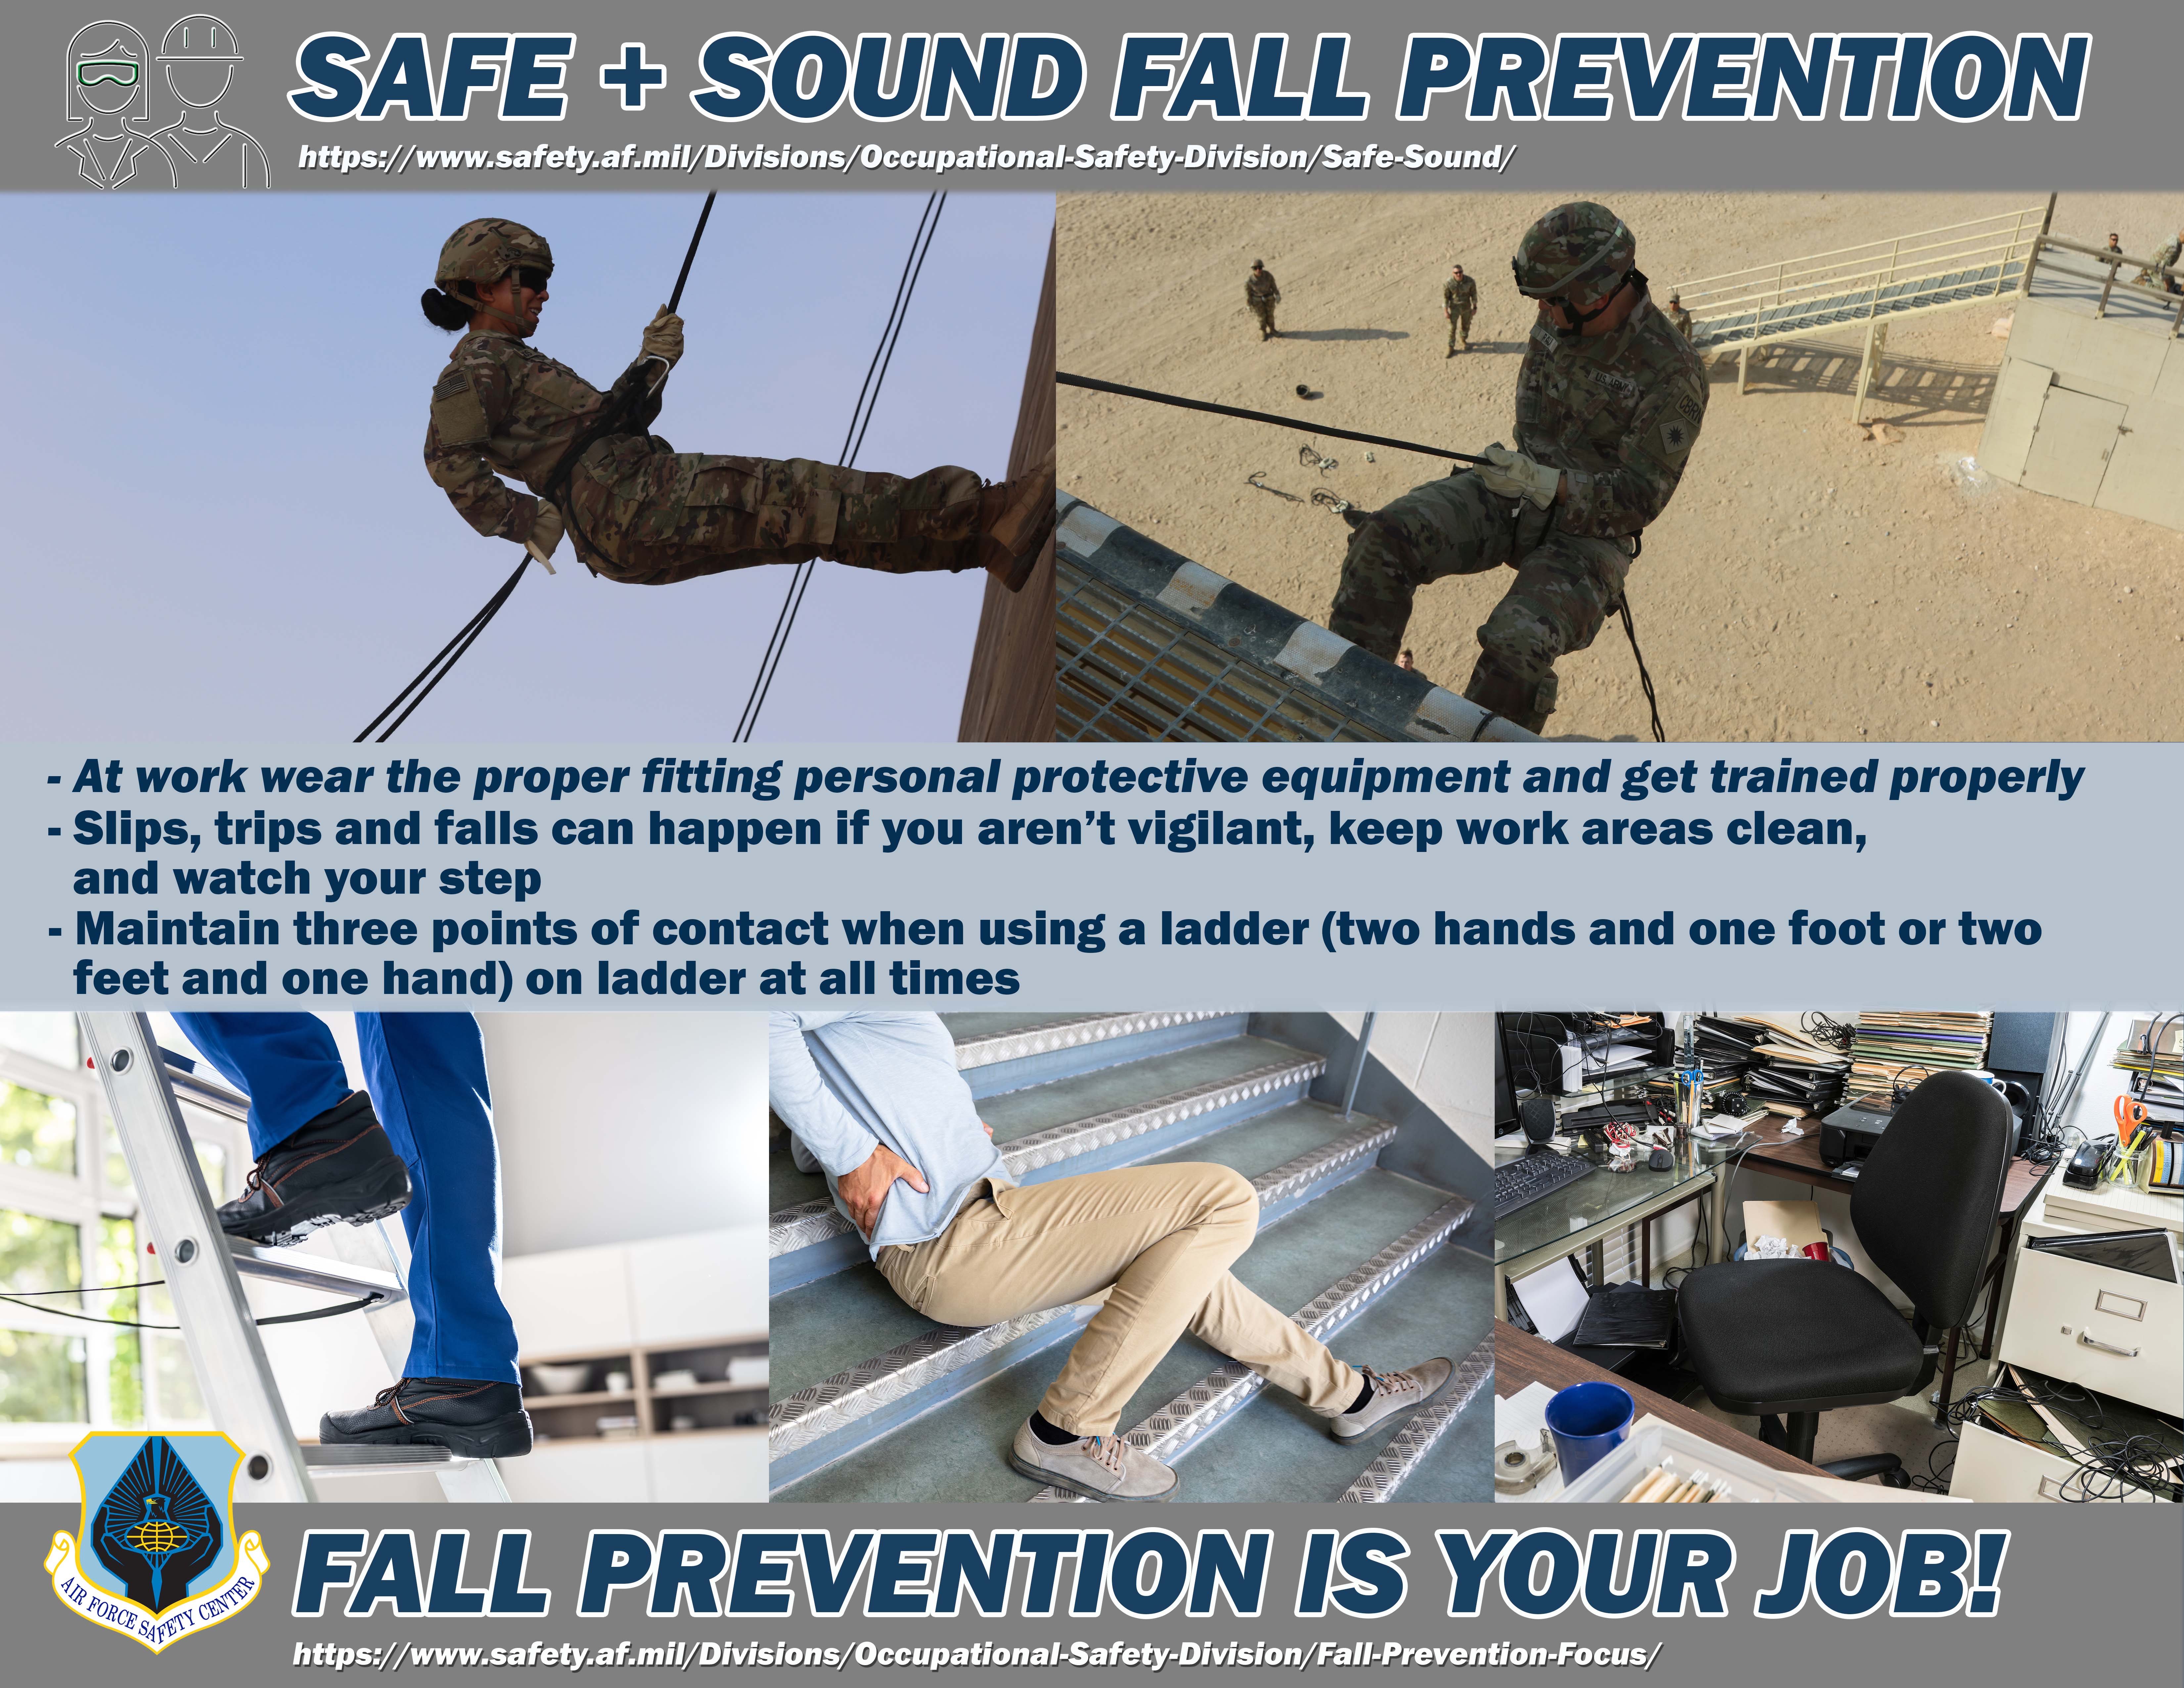 Safe + Sound Fall Prevention graphic